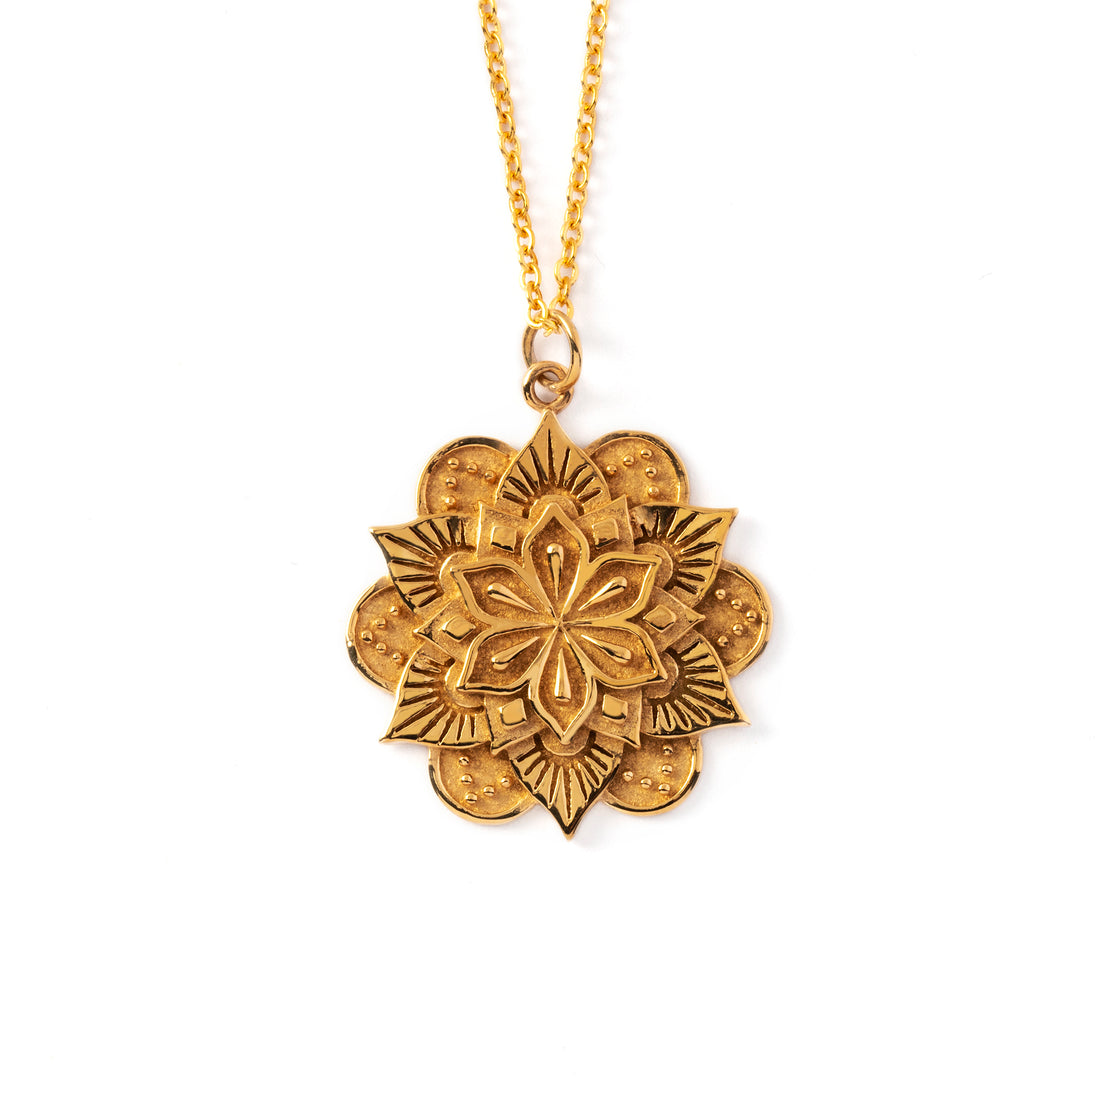 Padma mandala necklace in bronze frontal view